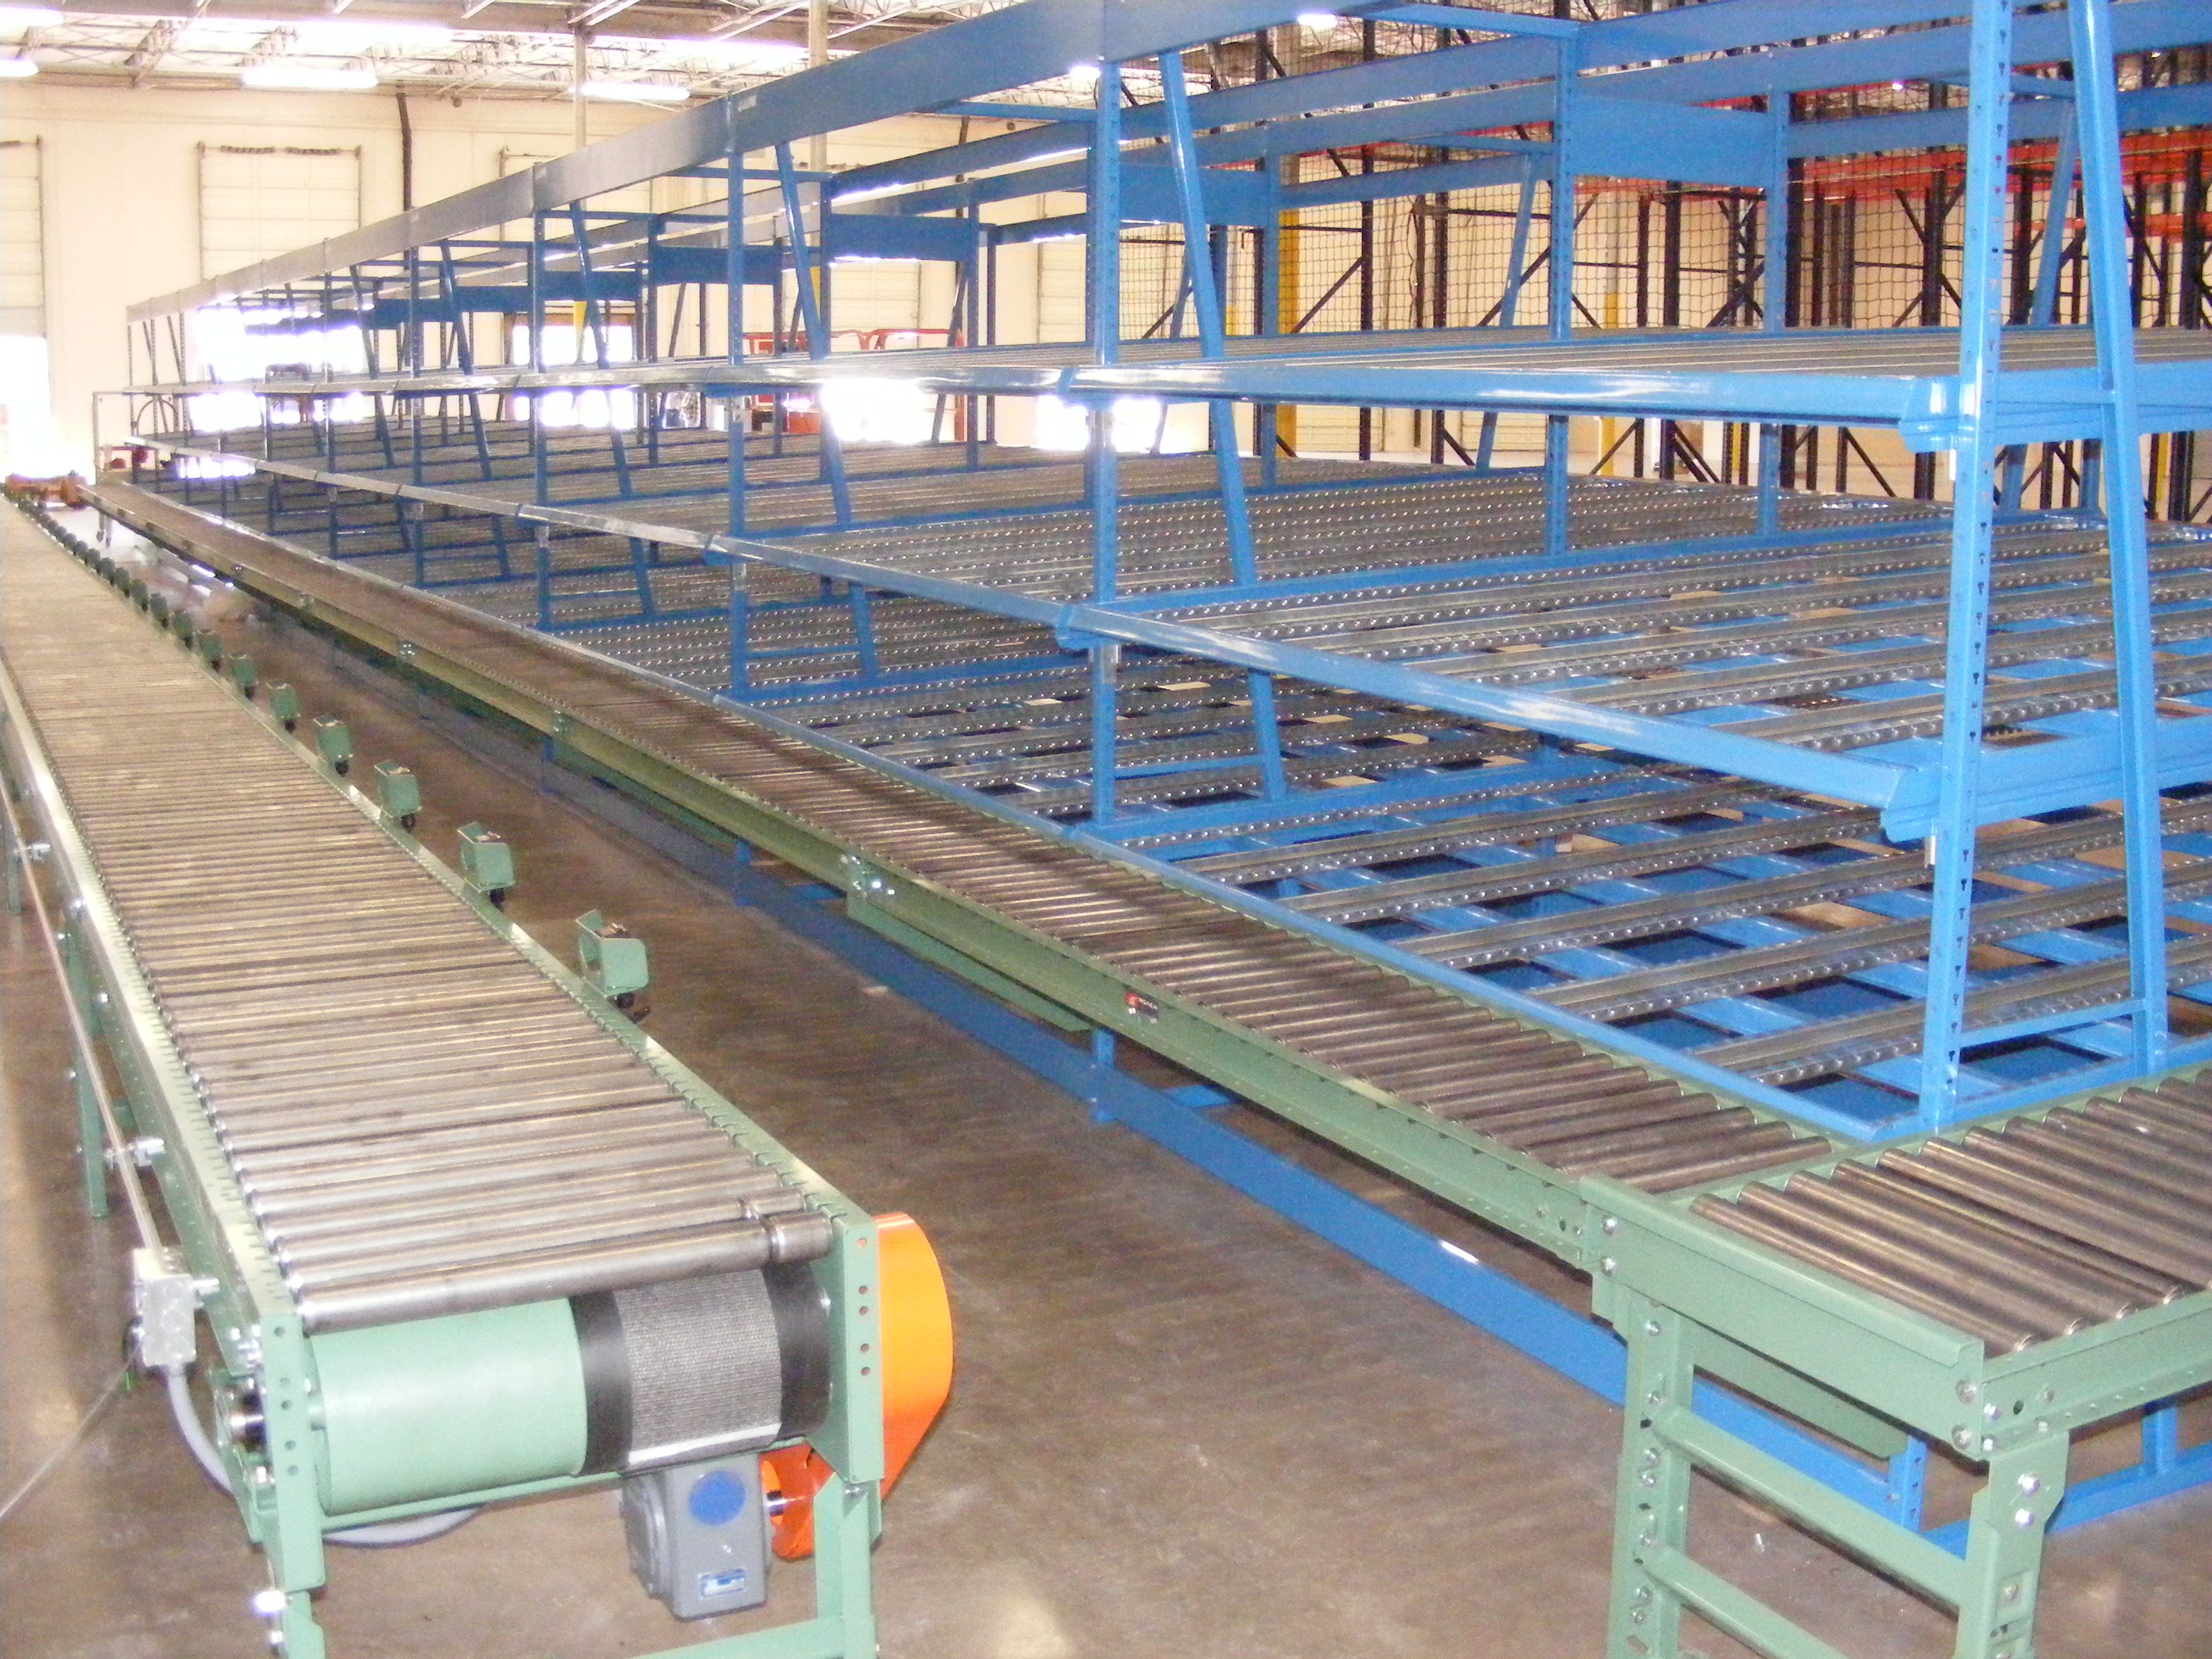 Conveyor System and Carton Flow Shelving